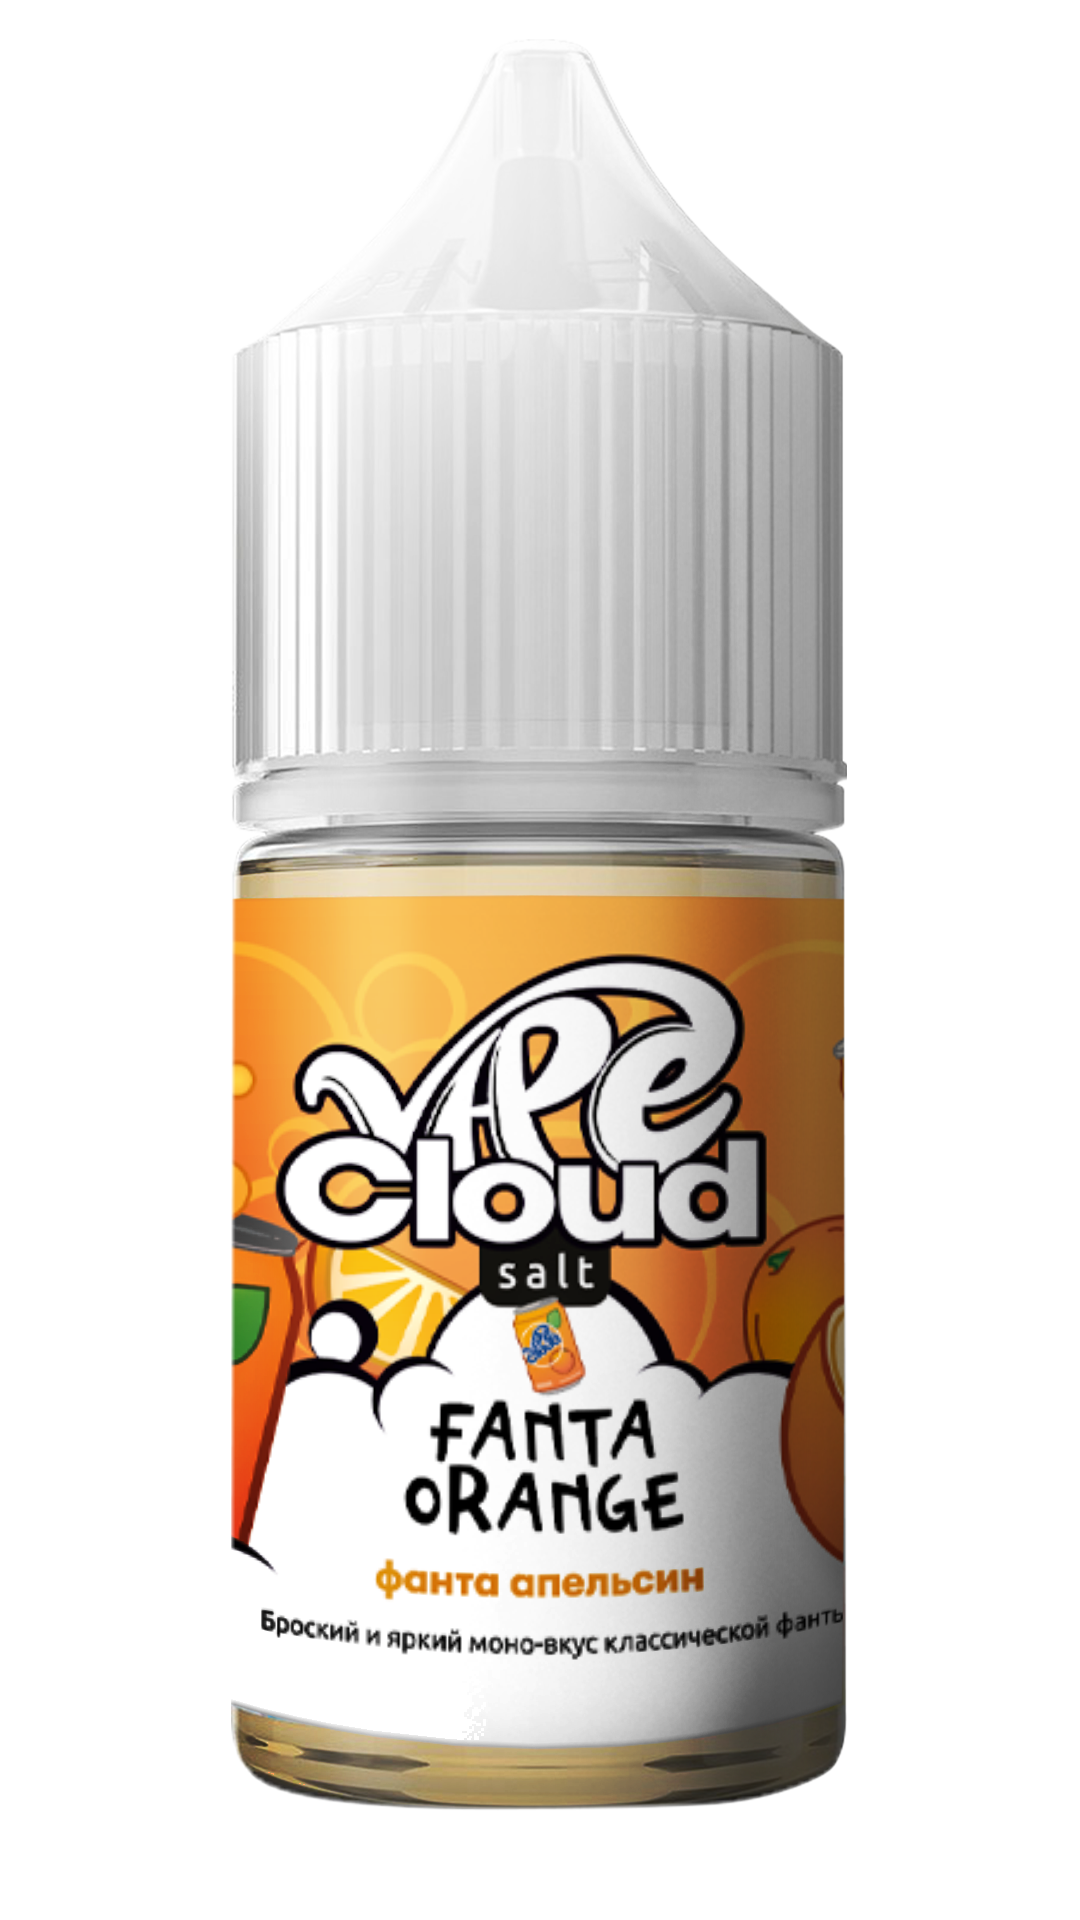 Vape Cloud / Фанта апельсин